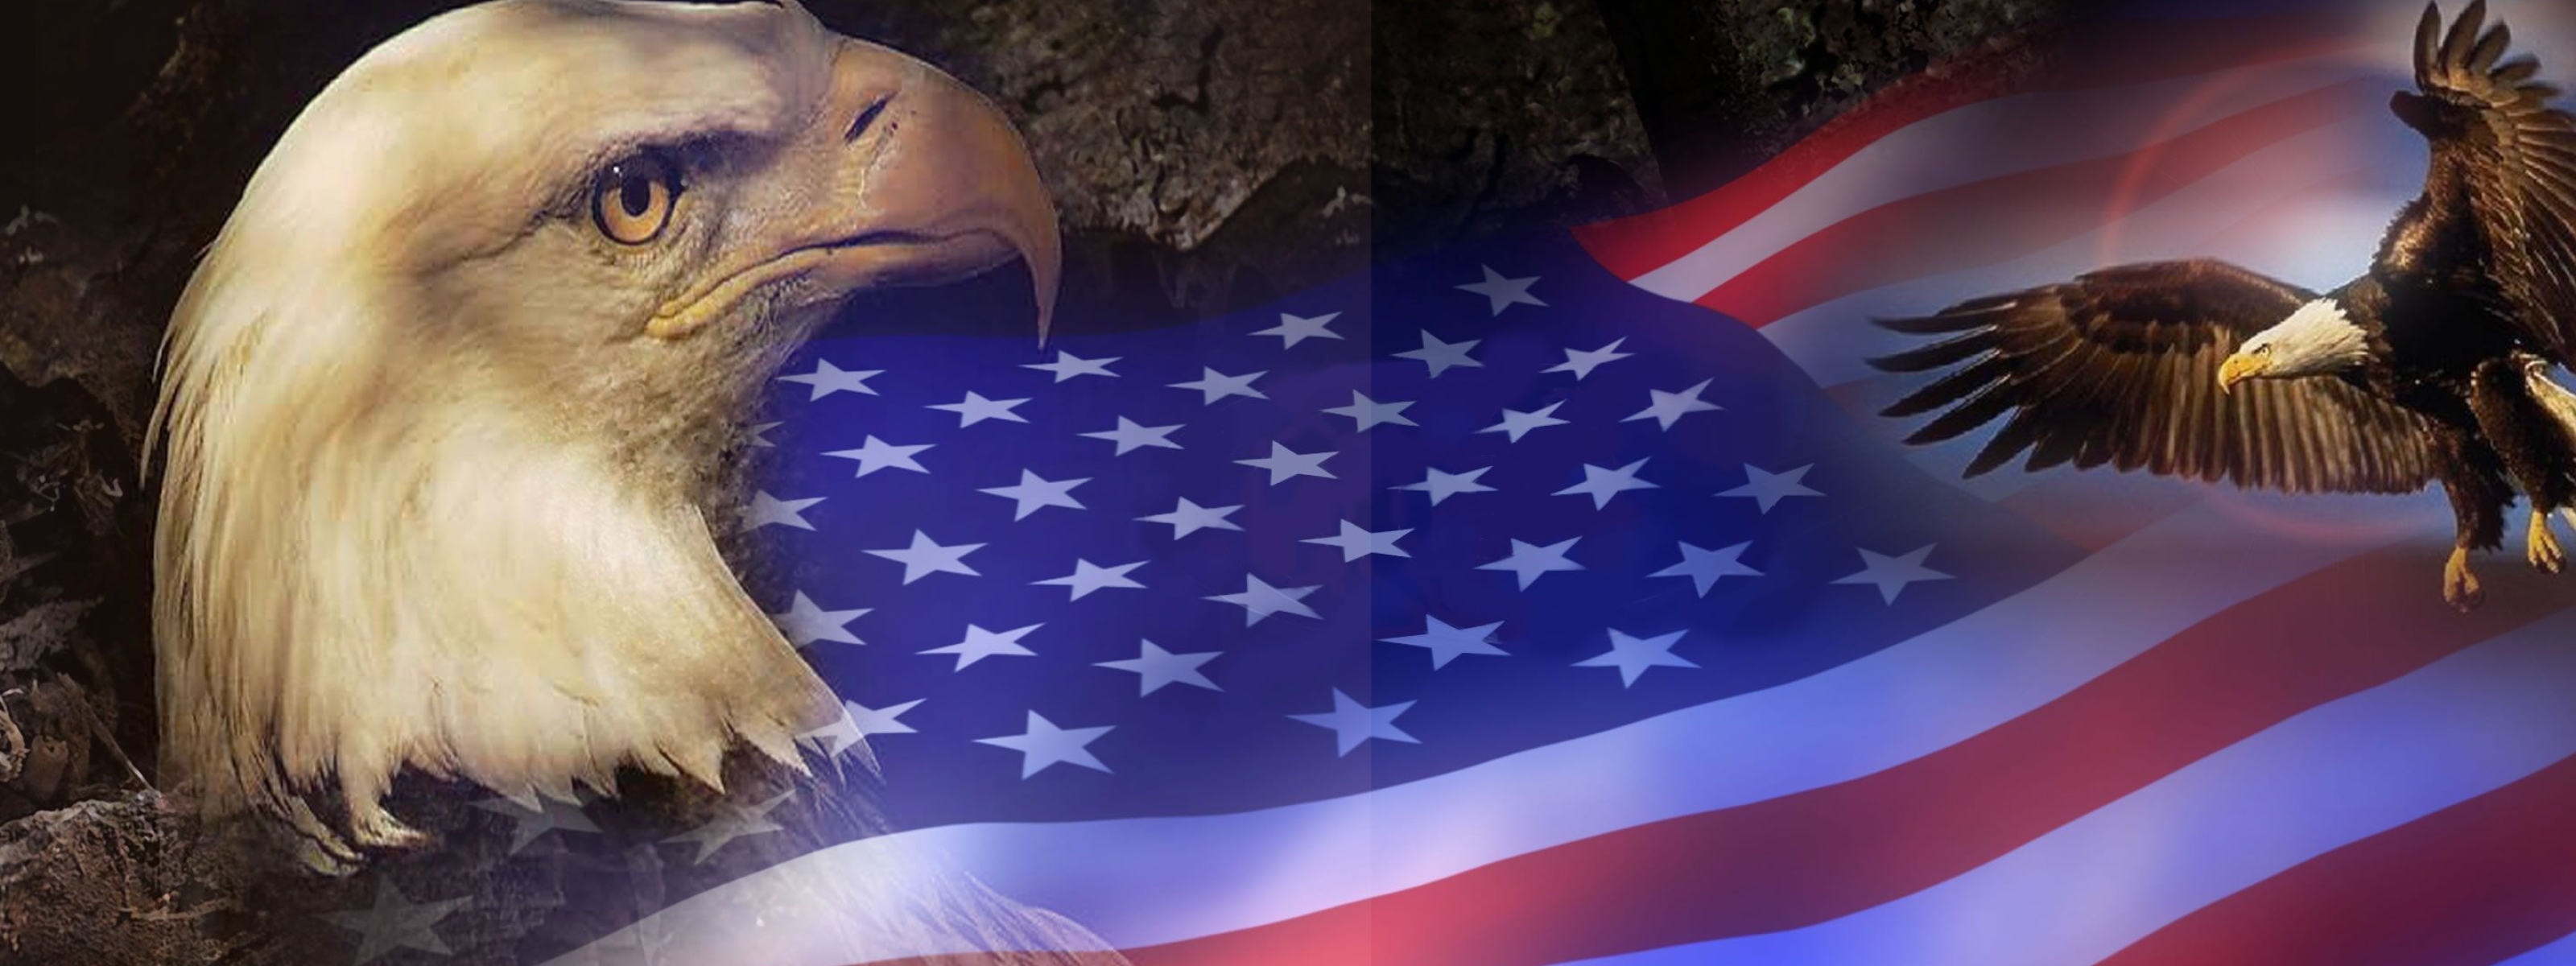 3200x1200 Patriotic Bald Eagle Wallpapers Top Free Patriotic Bald Eagle Backgrounds | Eagle wallpaper, Bald eagle, Eagle background